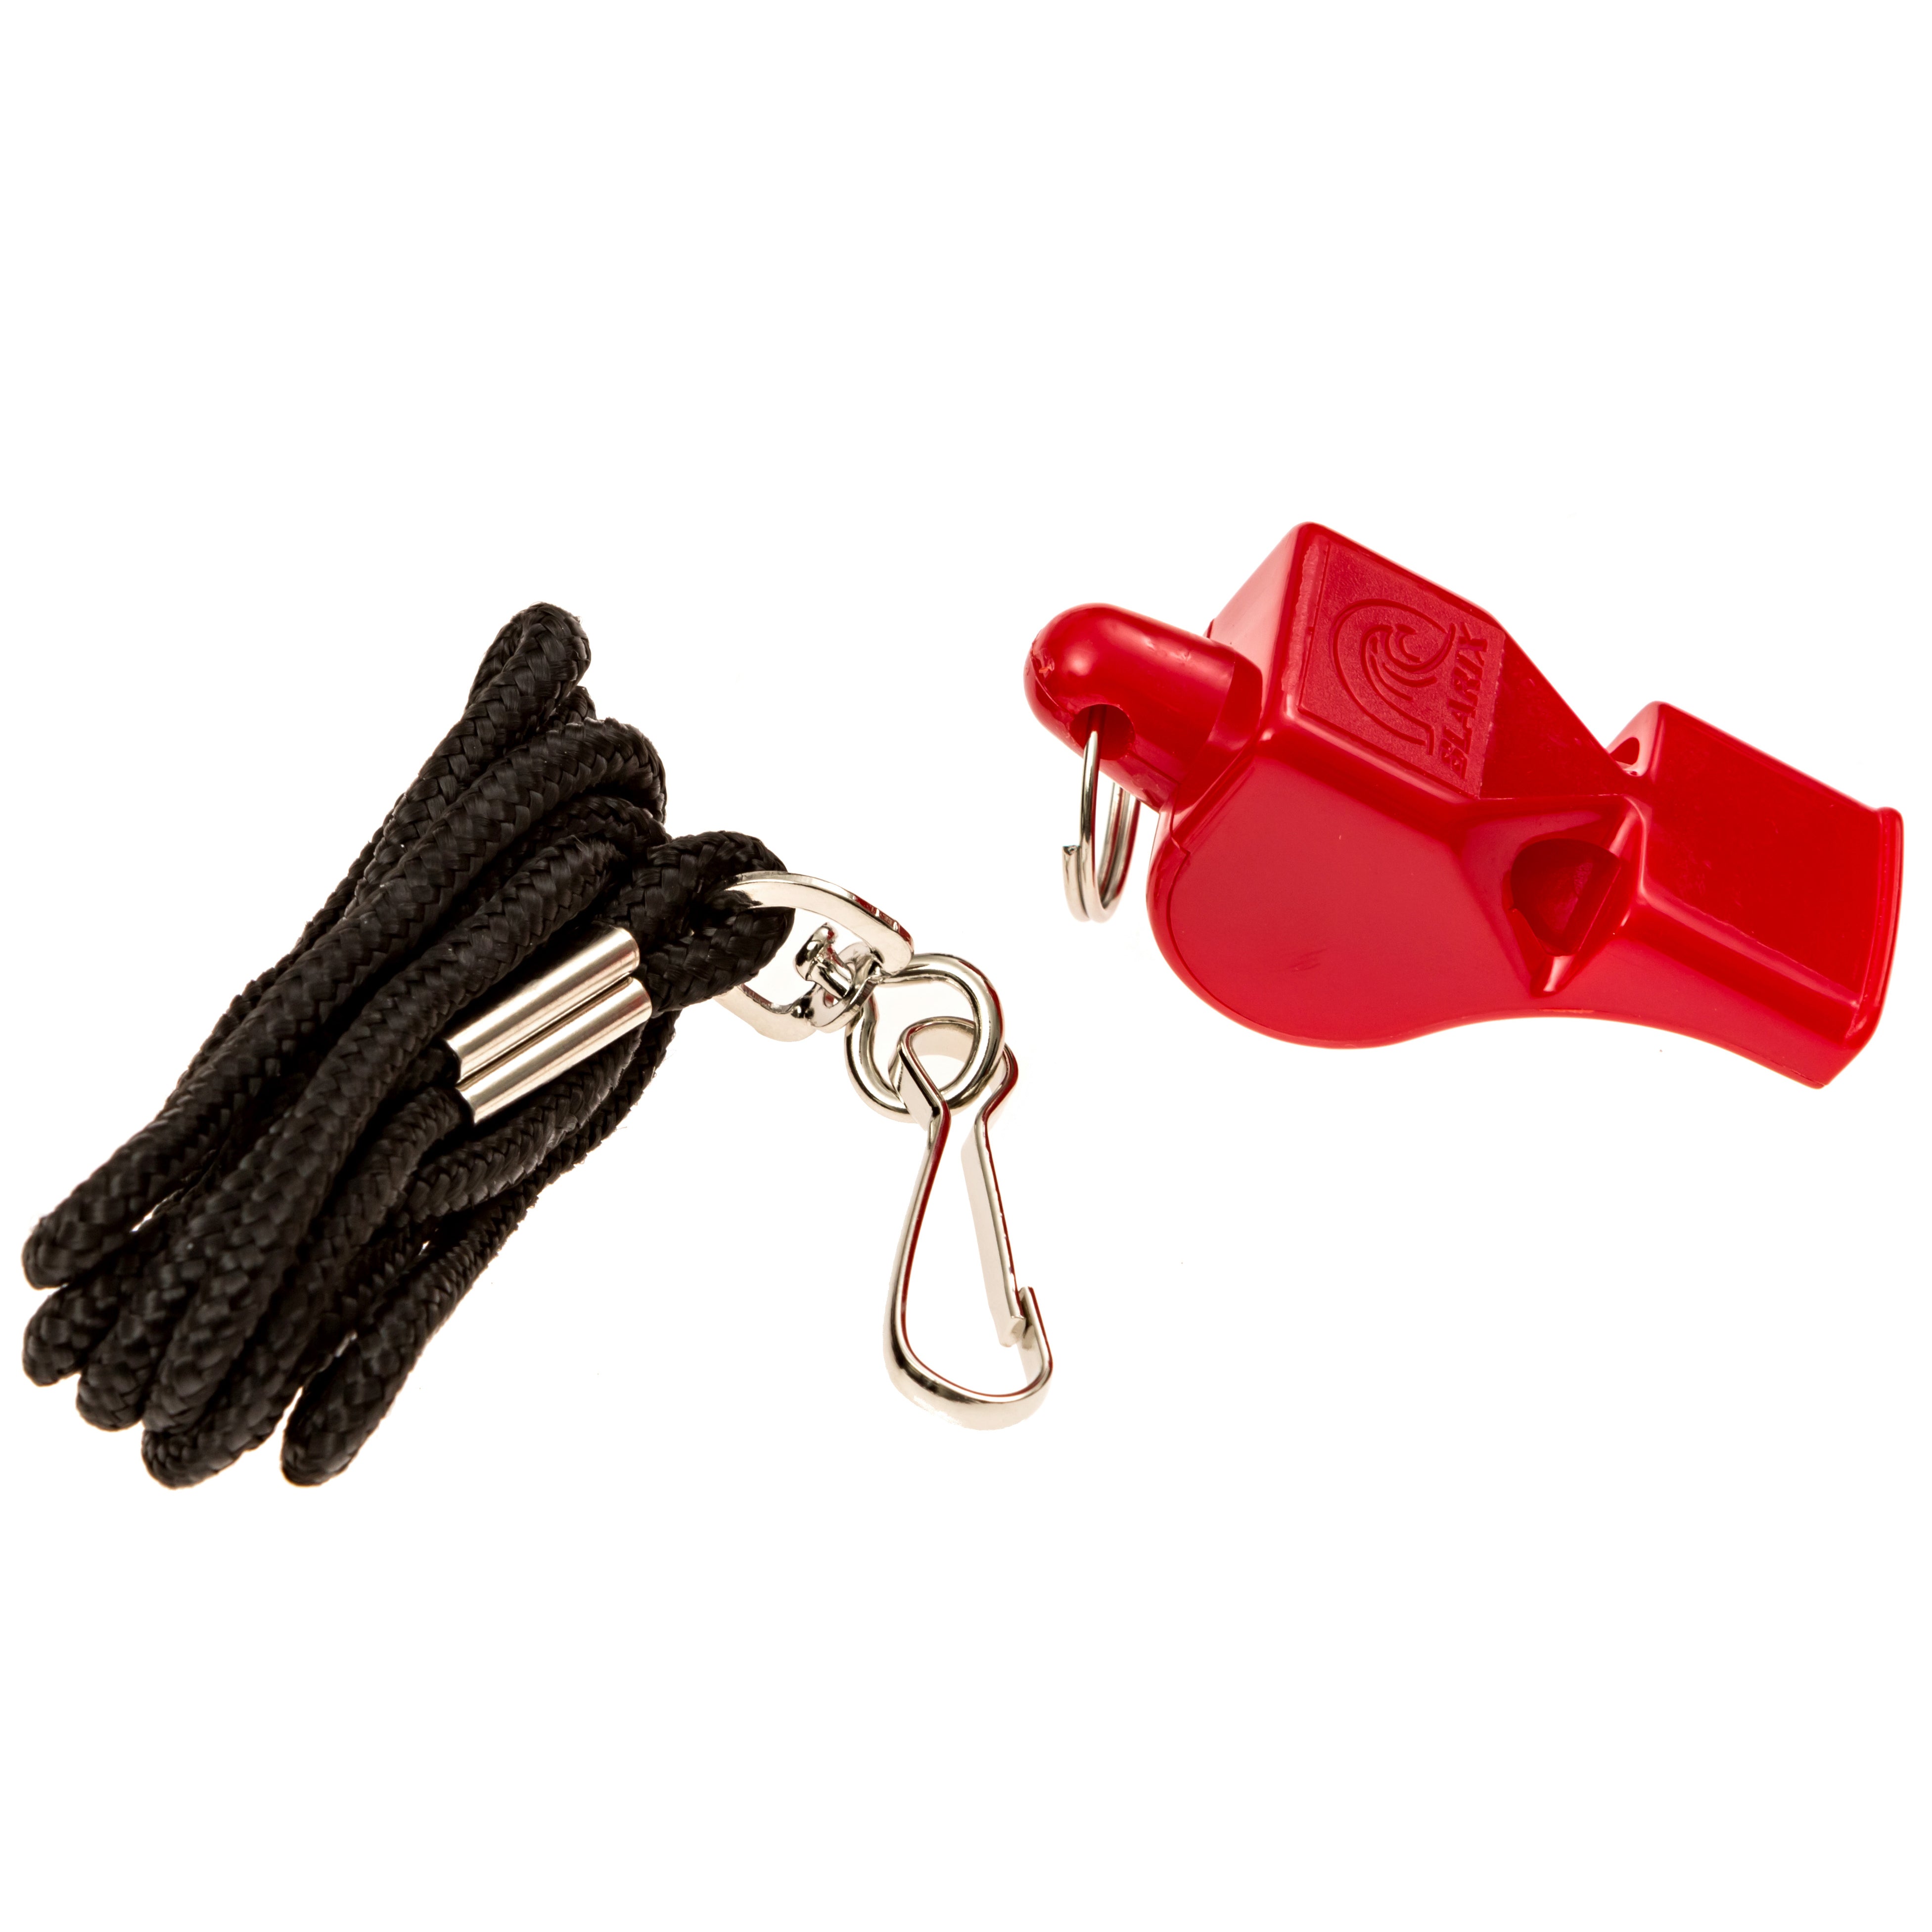 Lifeguard Whistle and Lanyard - BLARIX